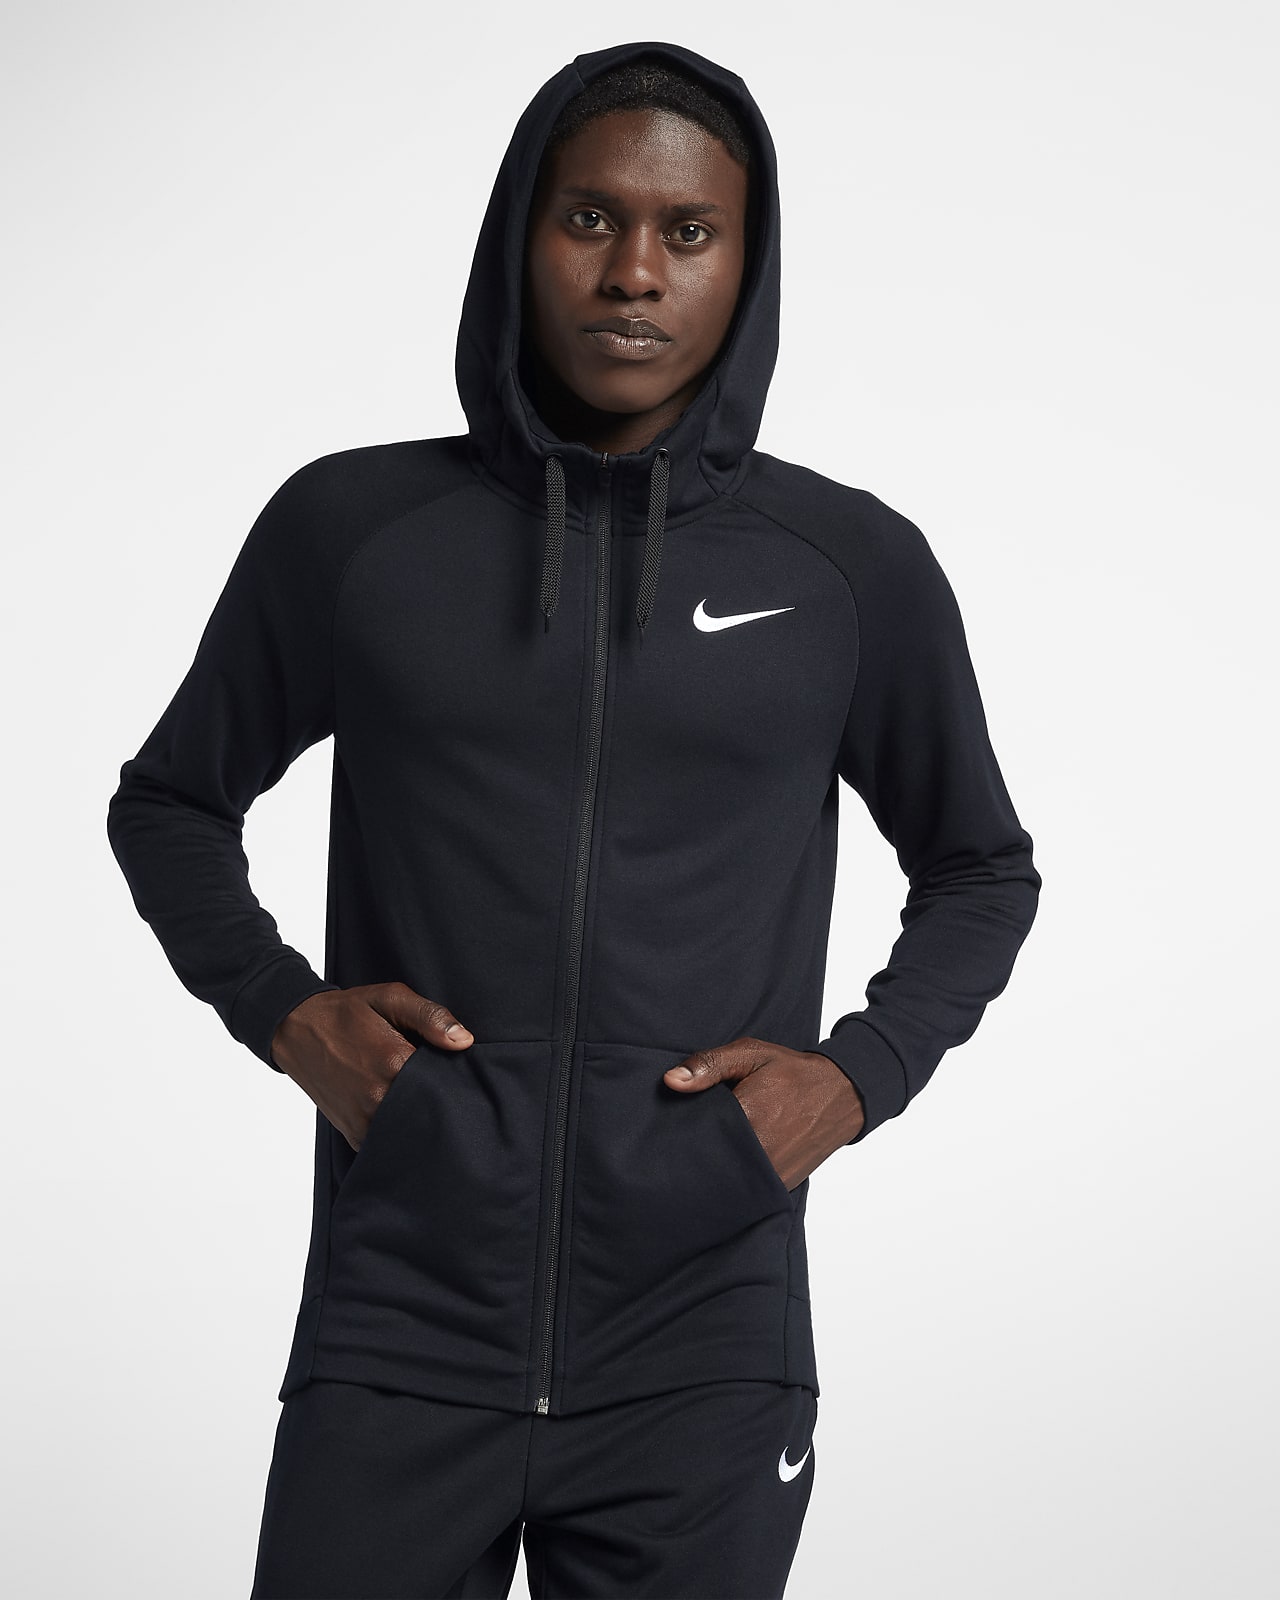 Nike Dri-FIT Men's Full-Zip Training 